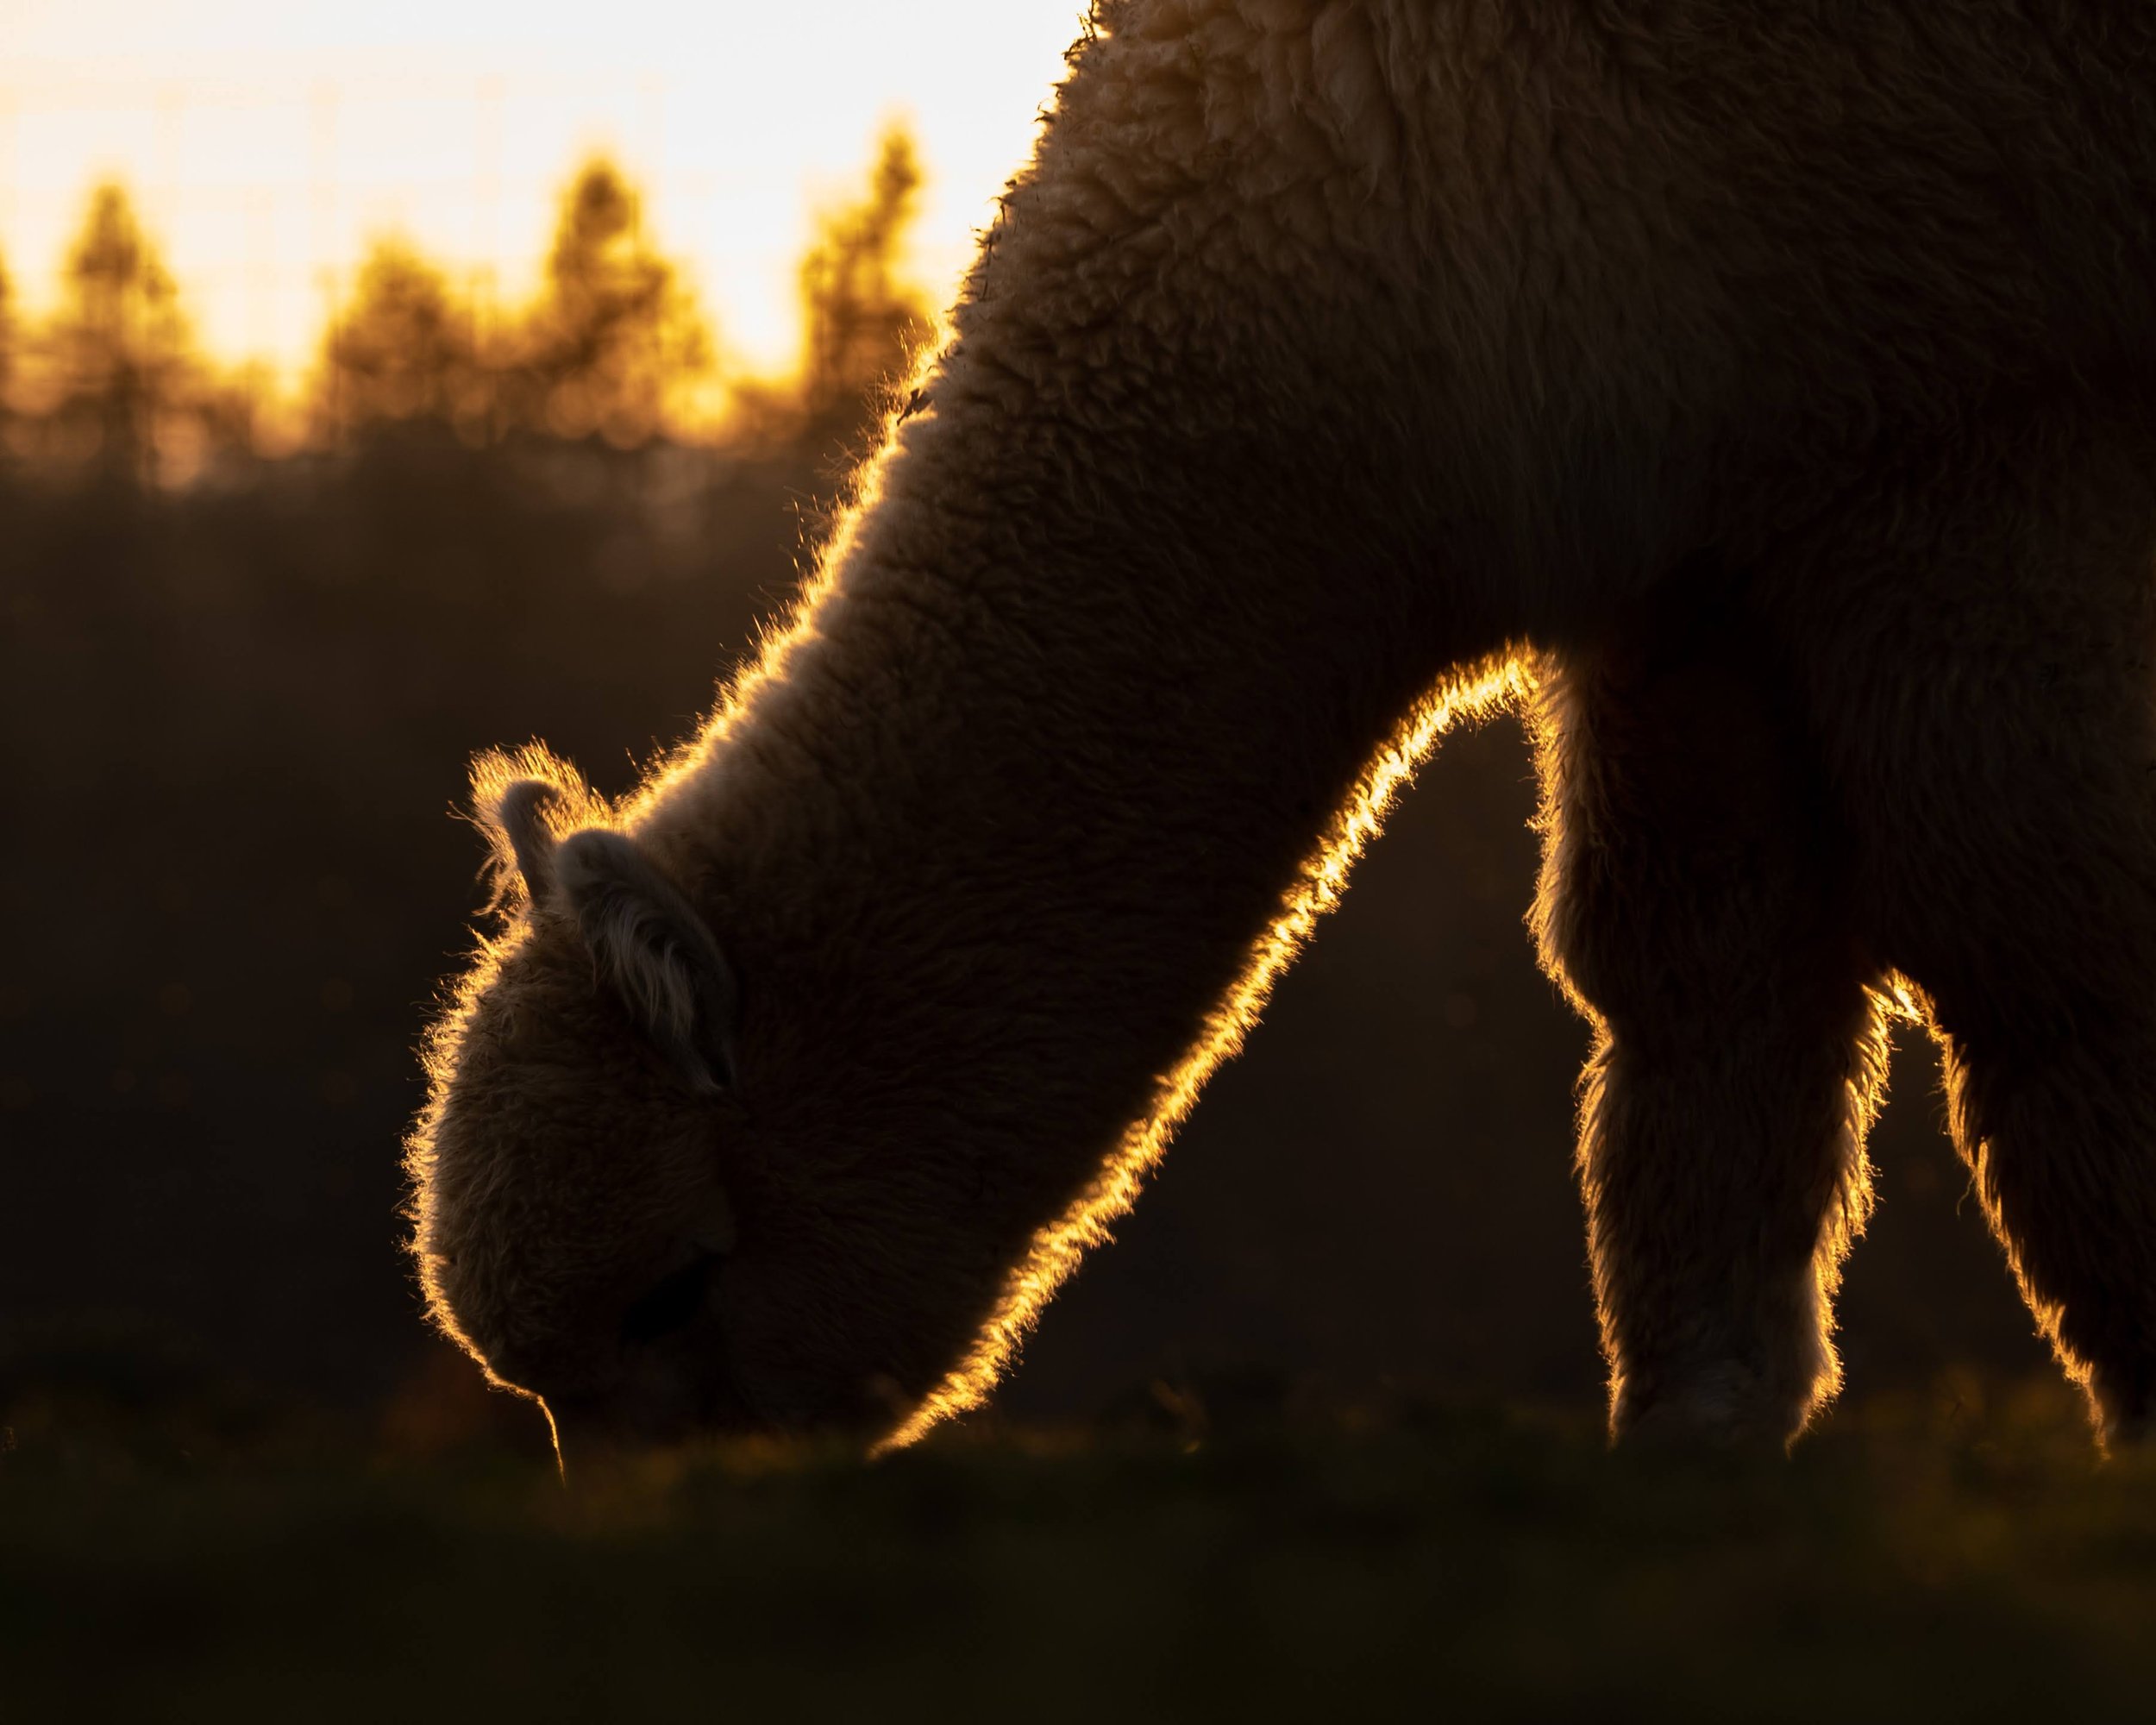 045_Oakwood Alpaca Farm and Gardens_Photography by Wasim Muklashy_3600px-webres.jpg